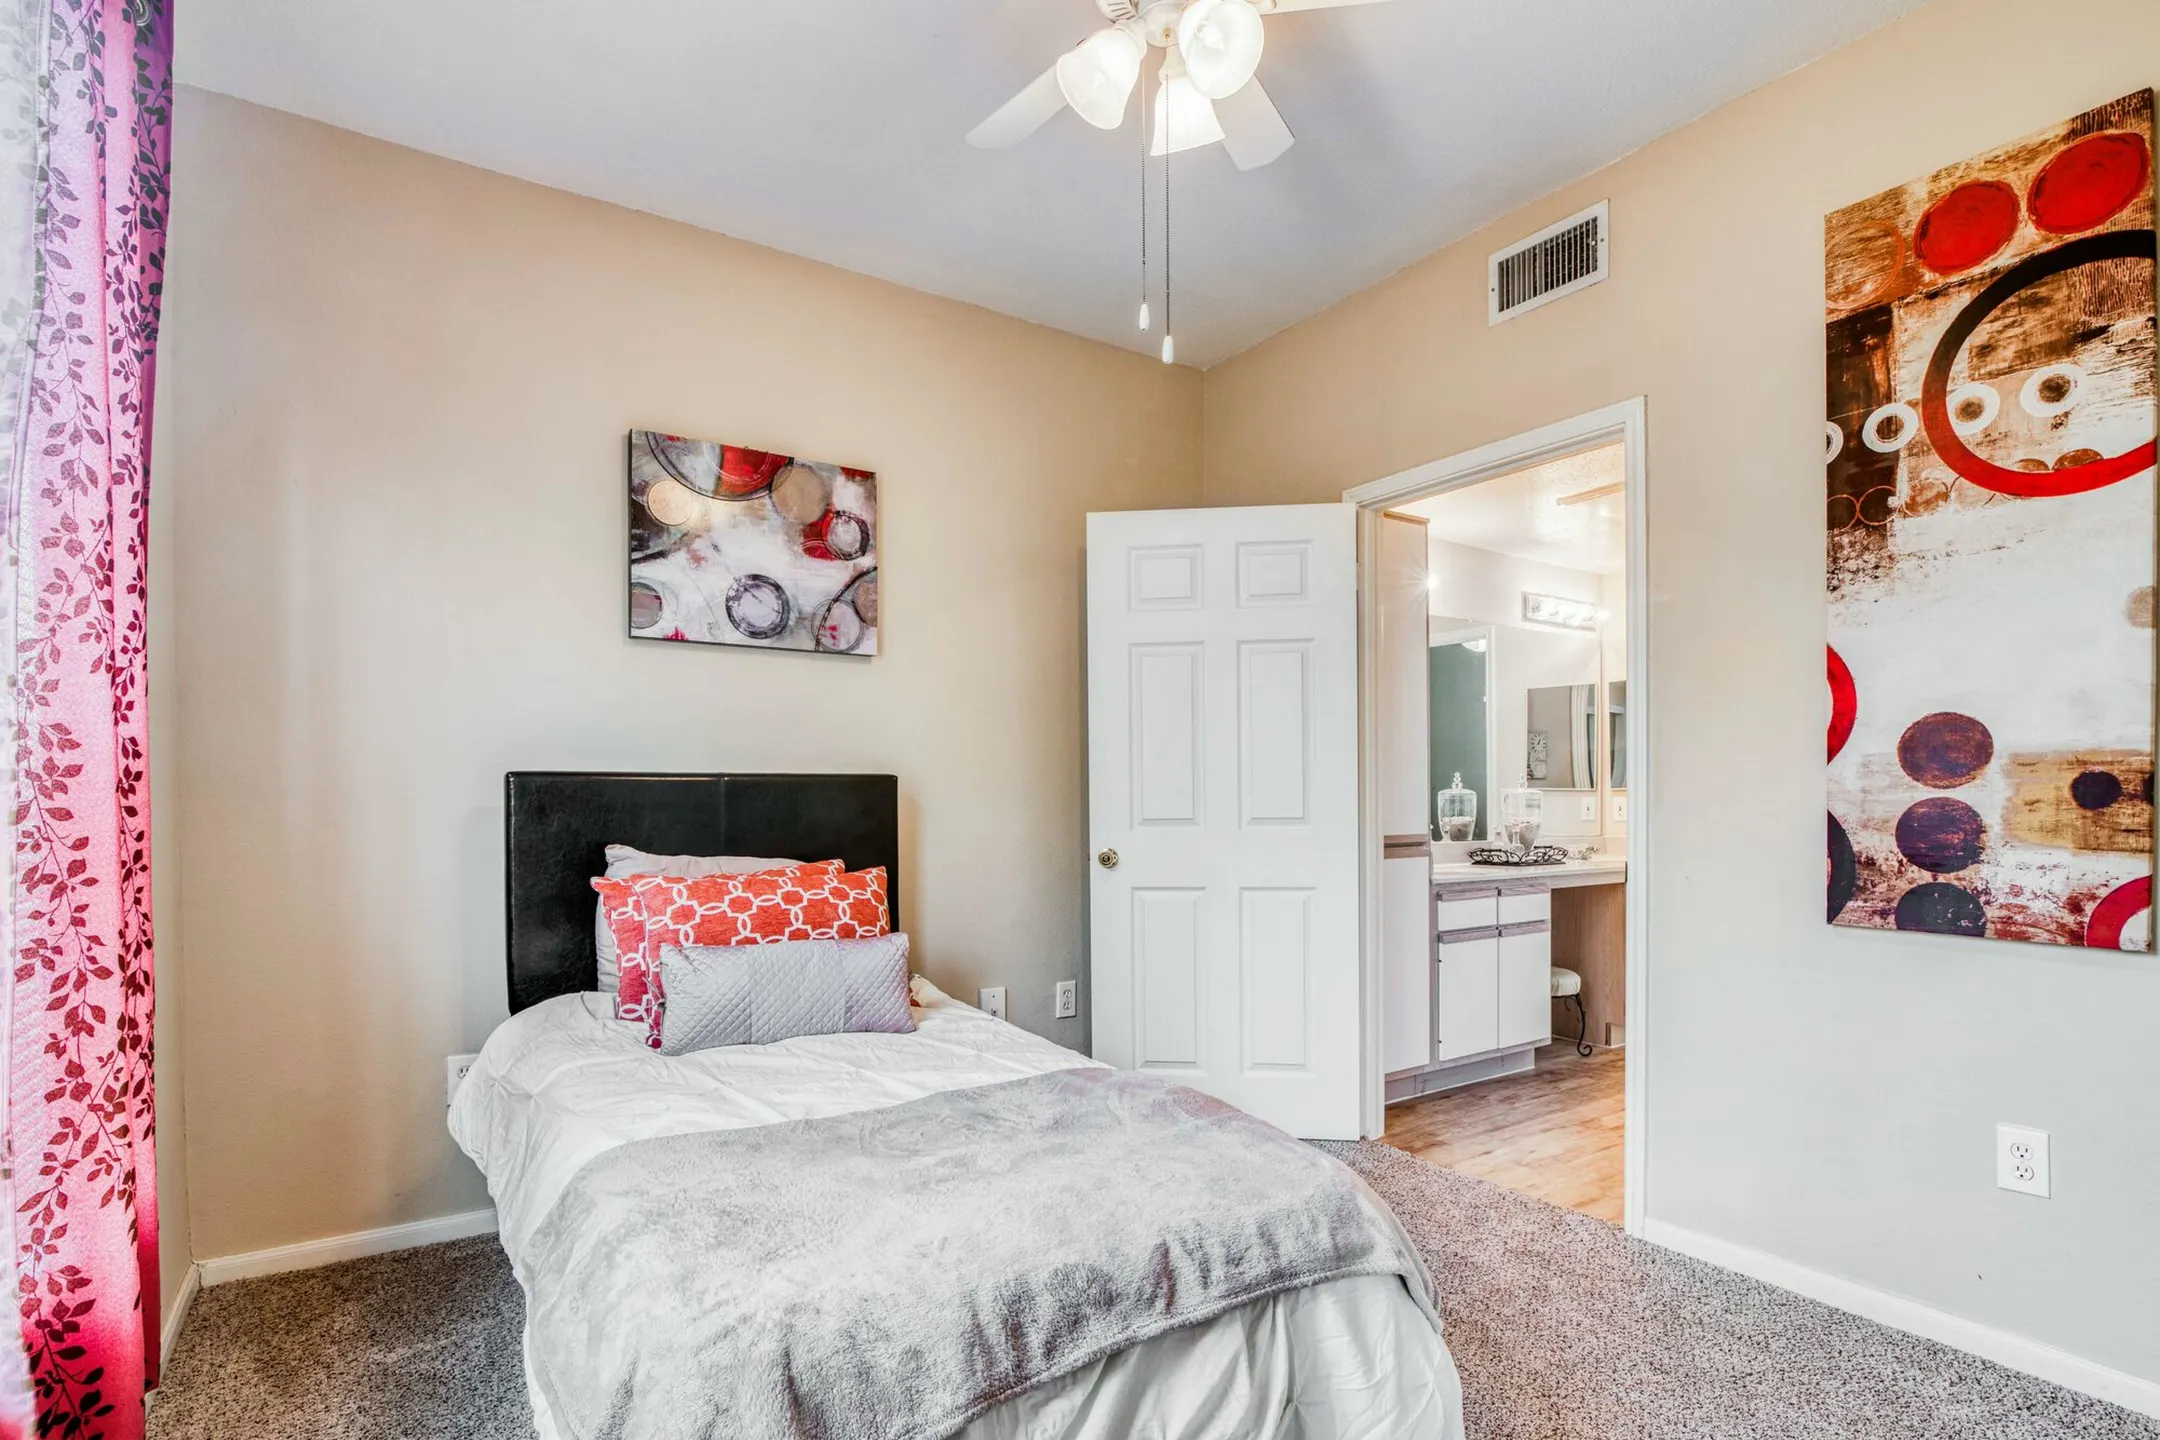 Bedroom - Farnham Park Apartments - Port Arthur, TX